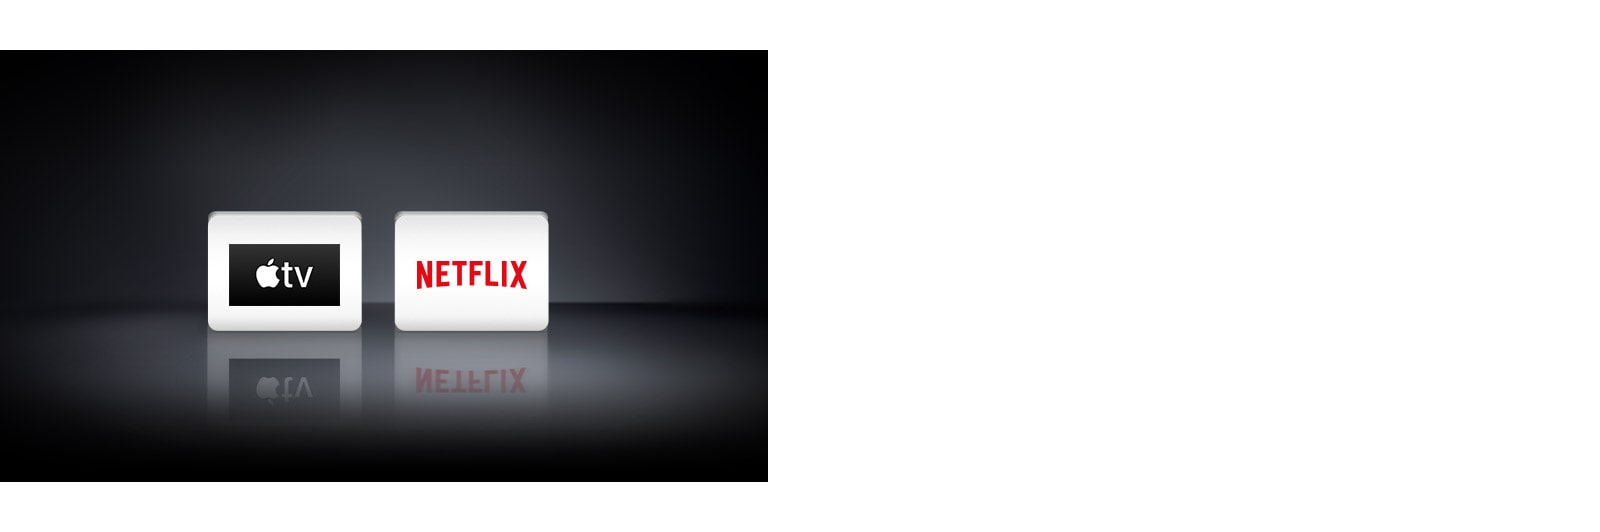 Deux logos : L’application Apple TV, Netflix